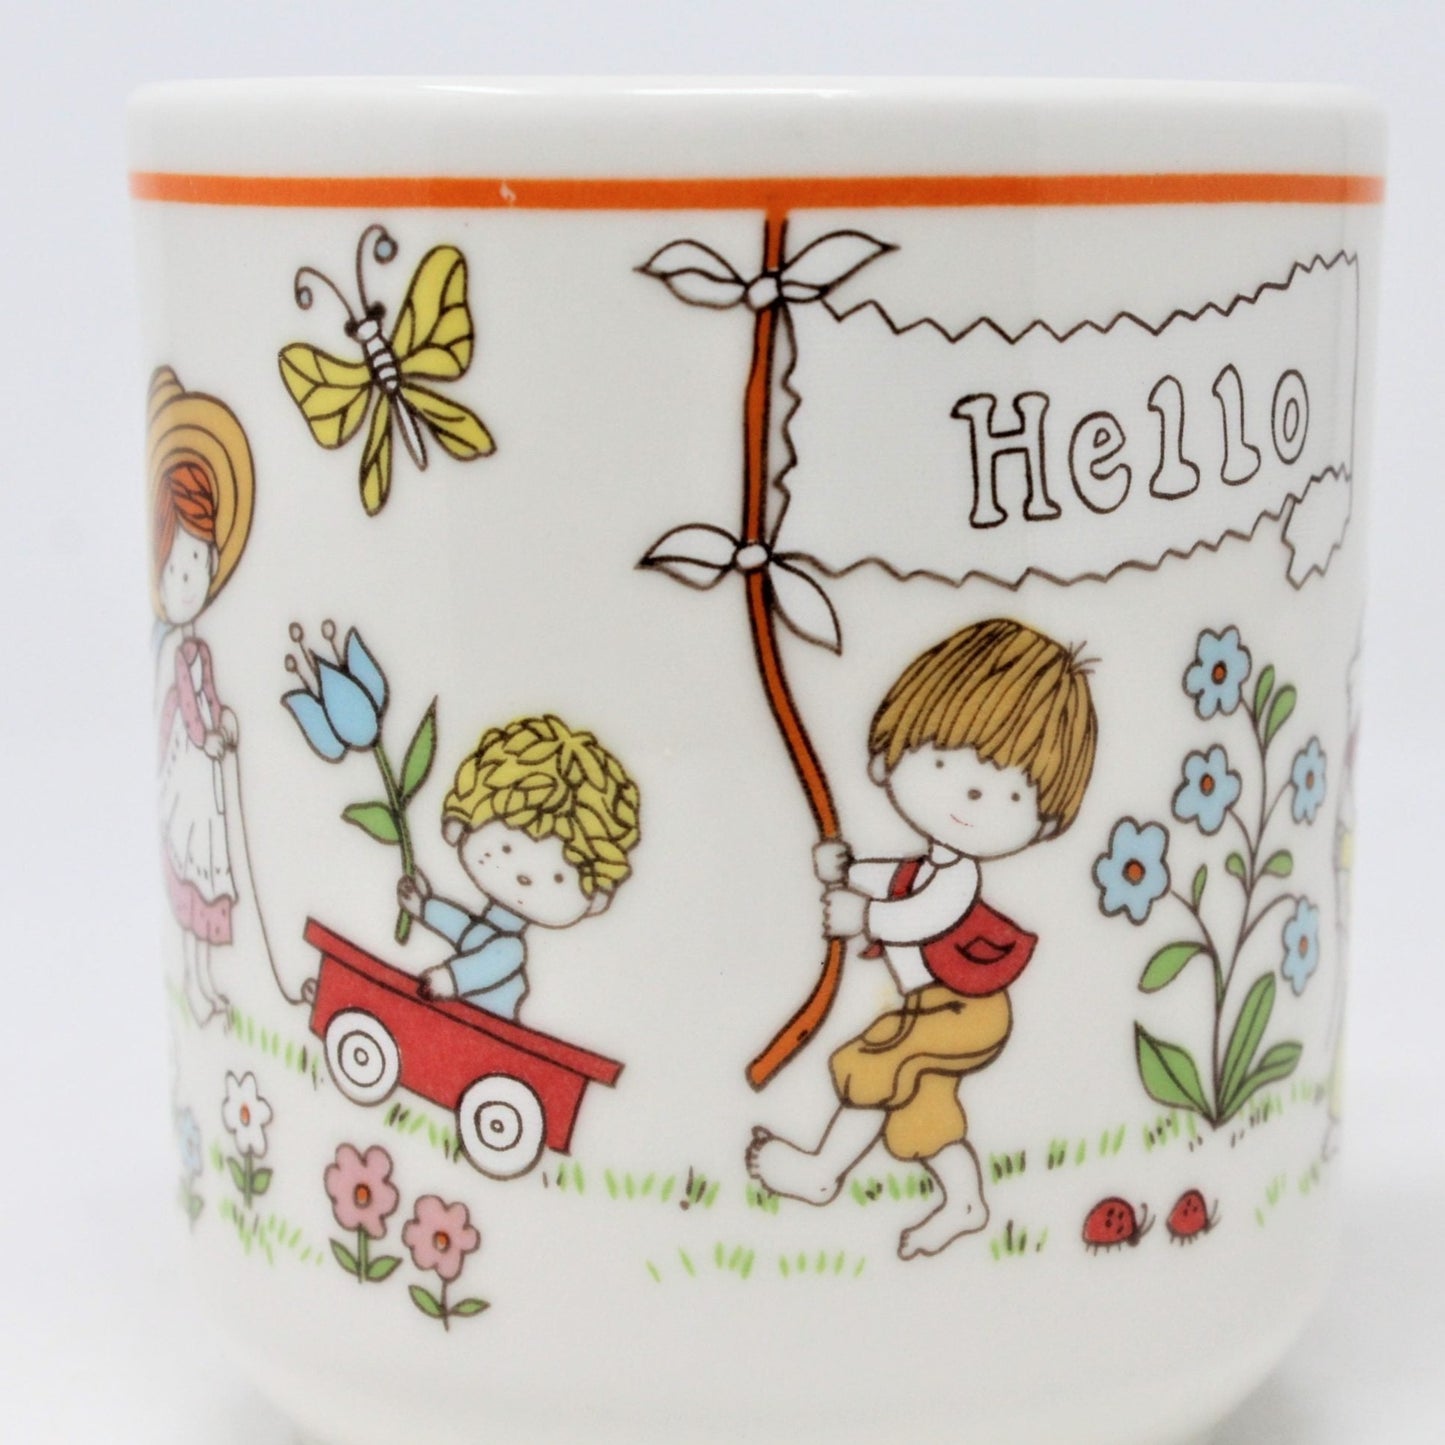 Mug / Child Cup, Lenox, Gentle Friends, Vintage 1975